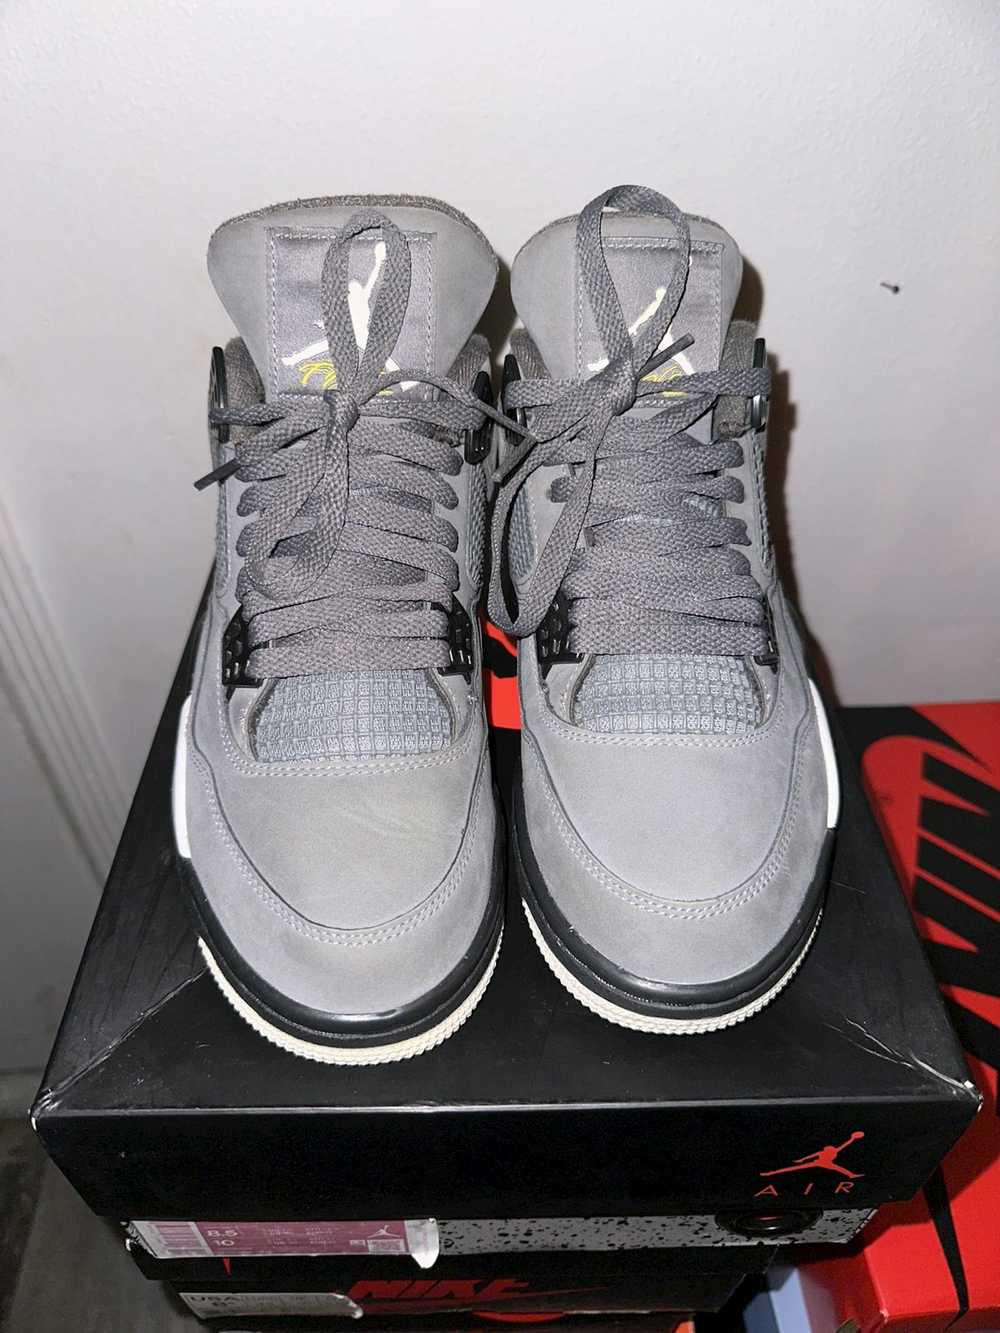 Jordan Brand × Nike Jordan 4 cool greys - image 3